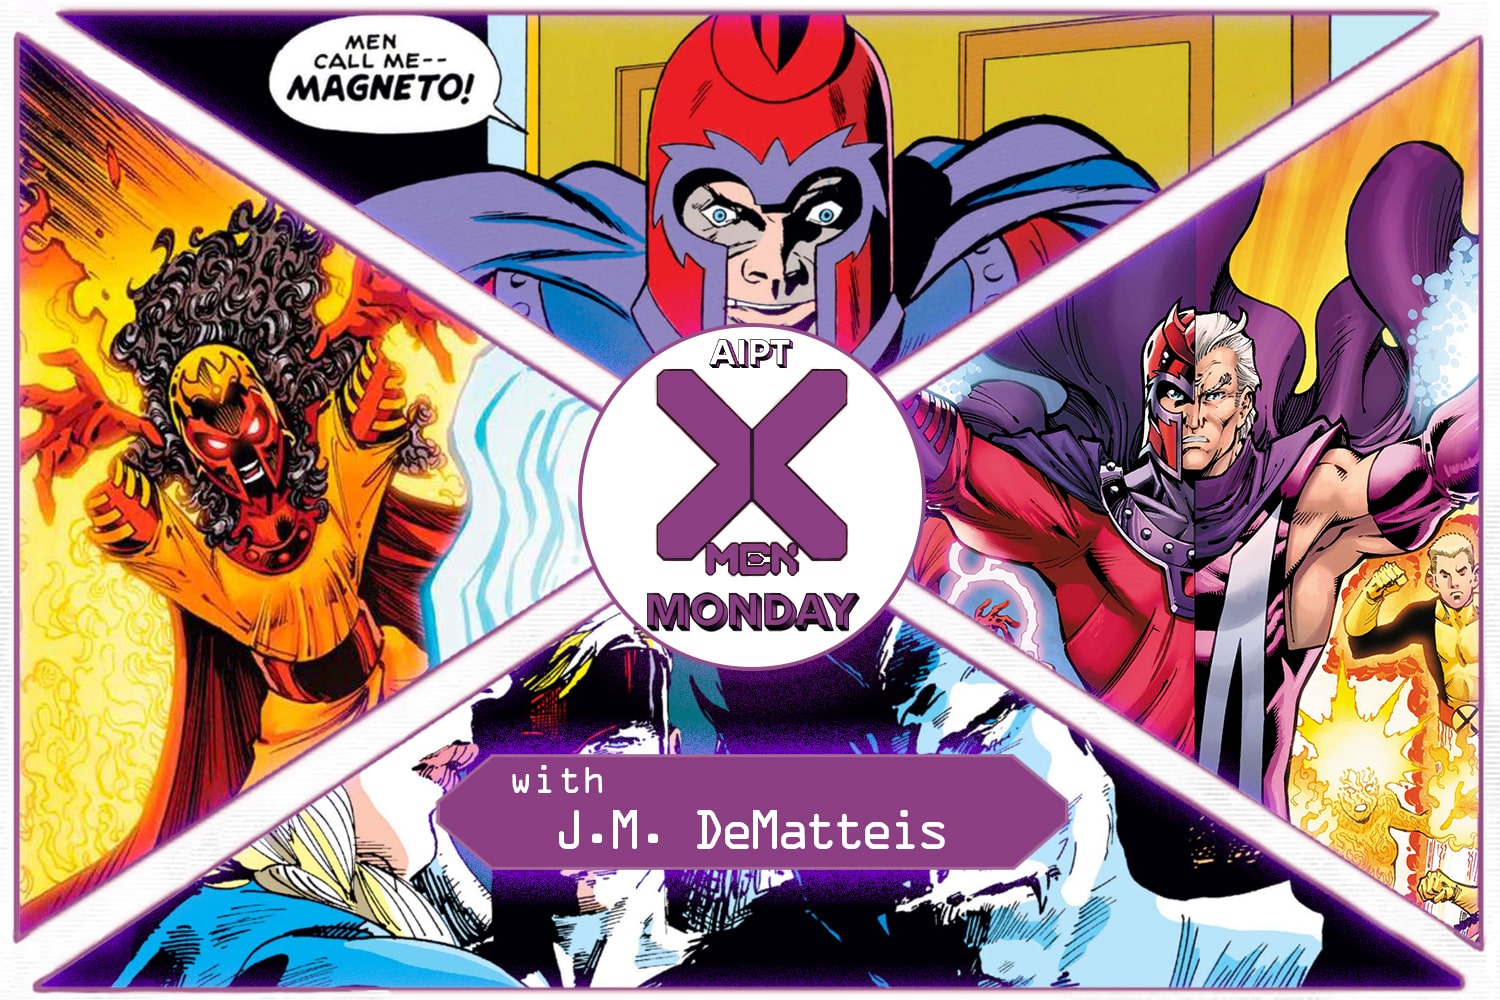 X-Men Monday #209 - J.M. DeMatteis Talks 'Magneto'